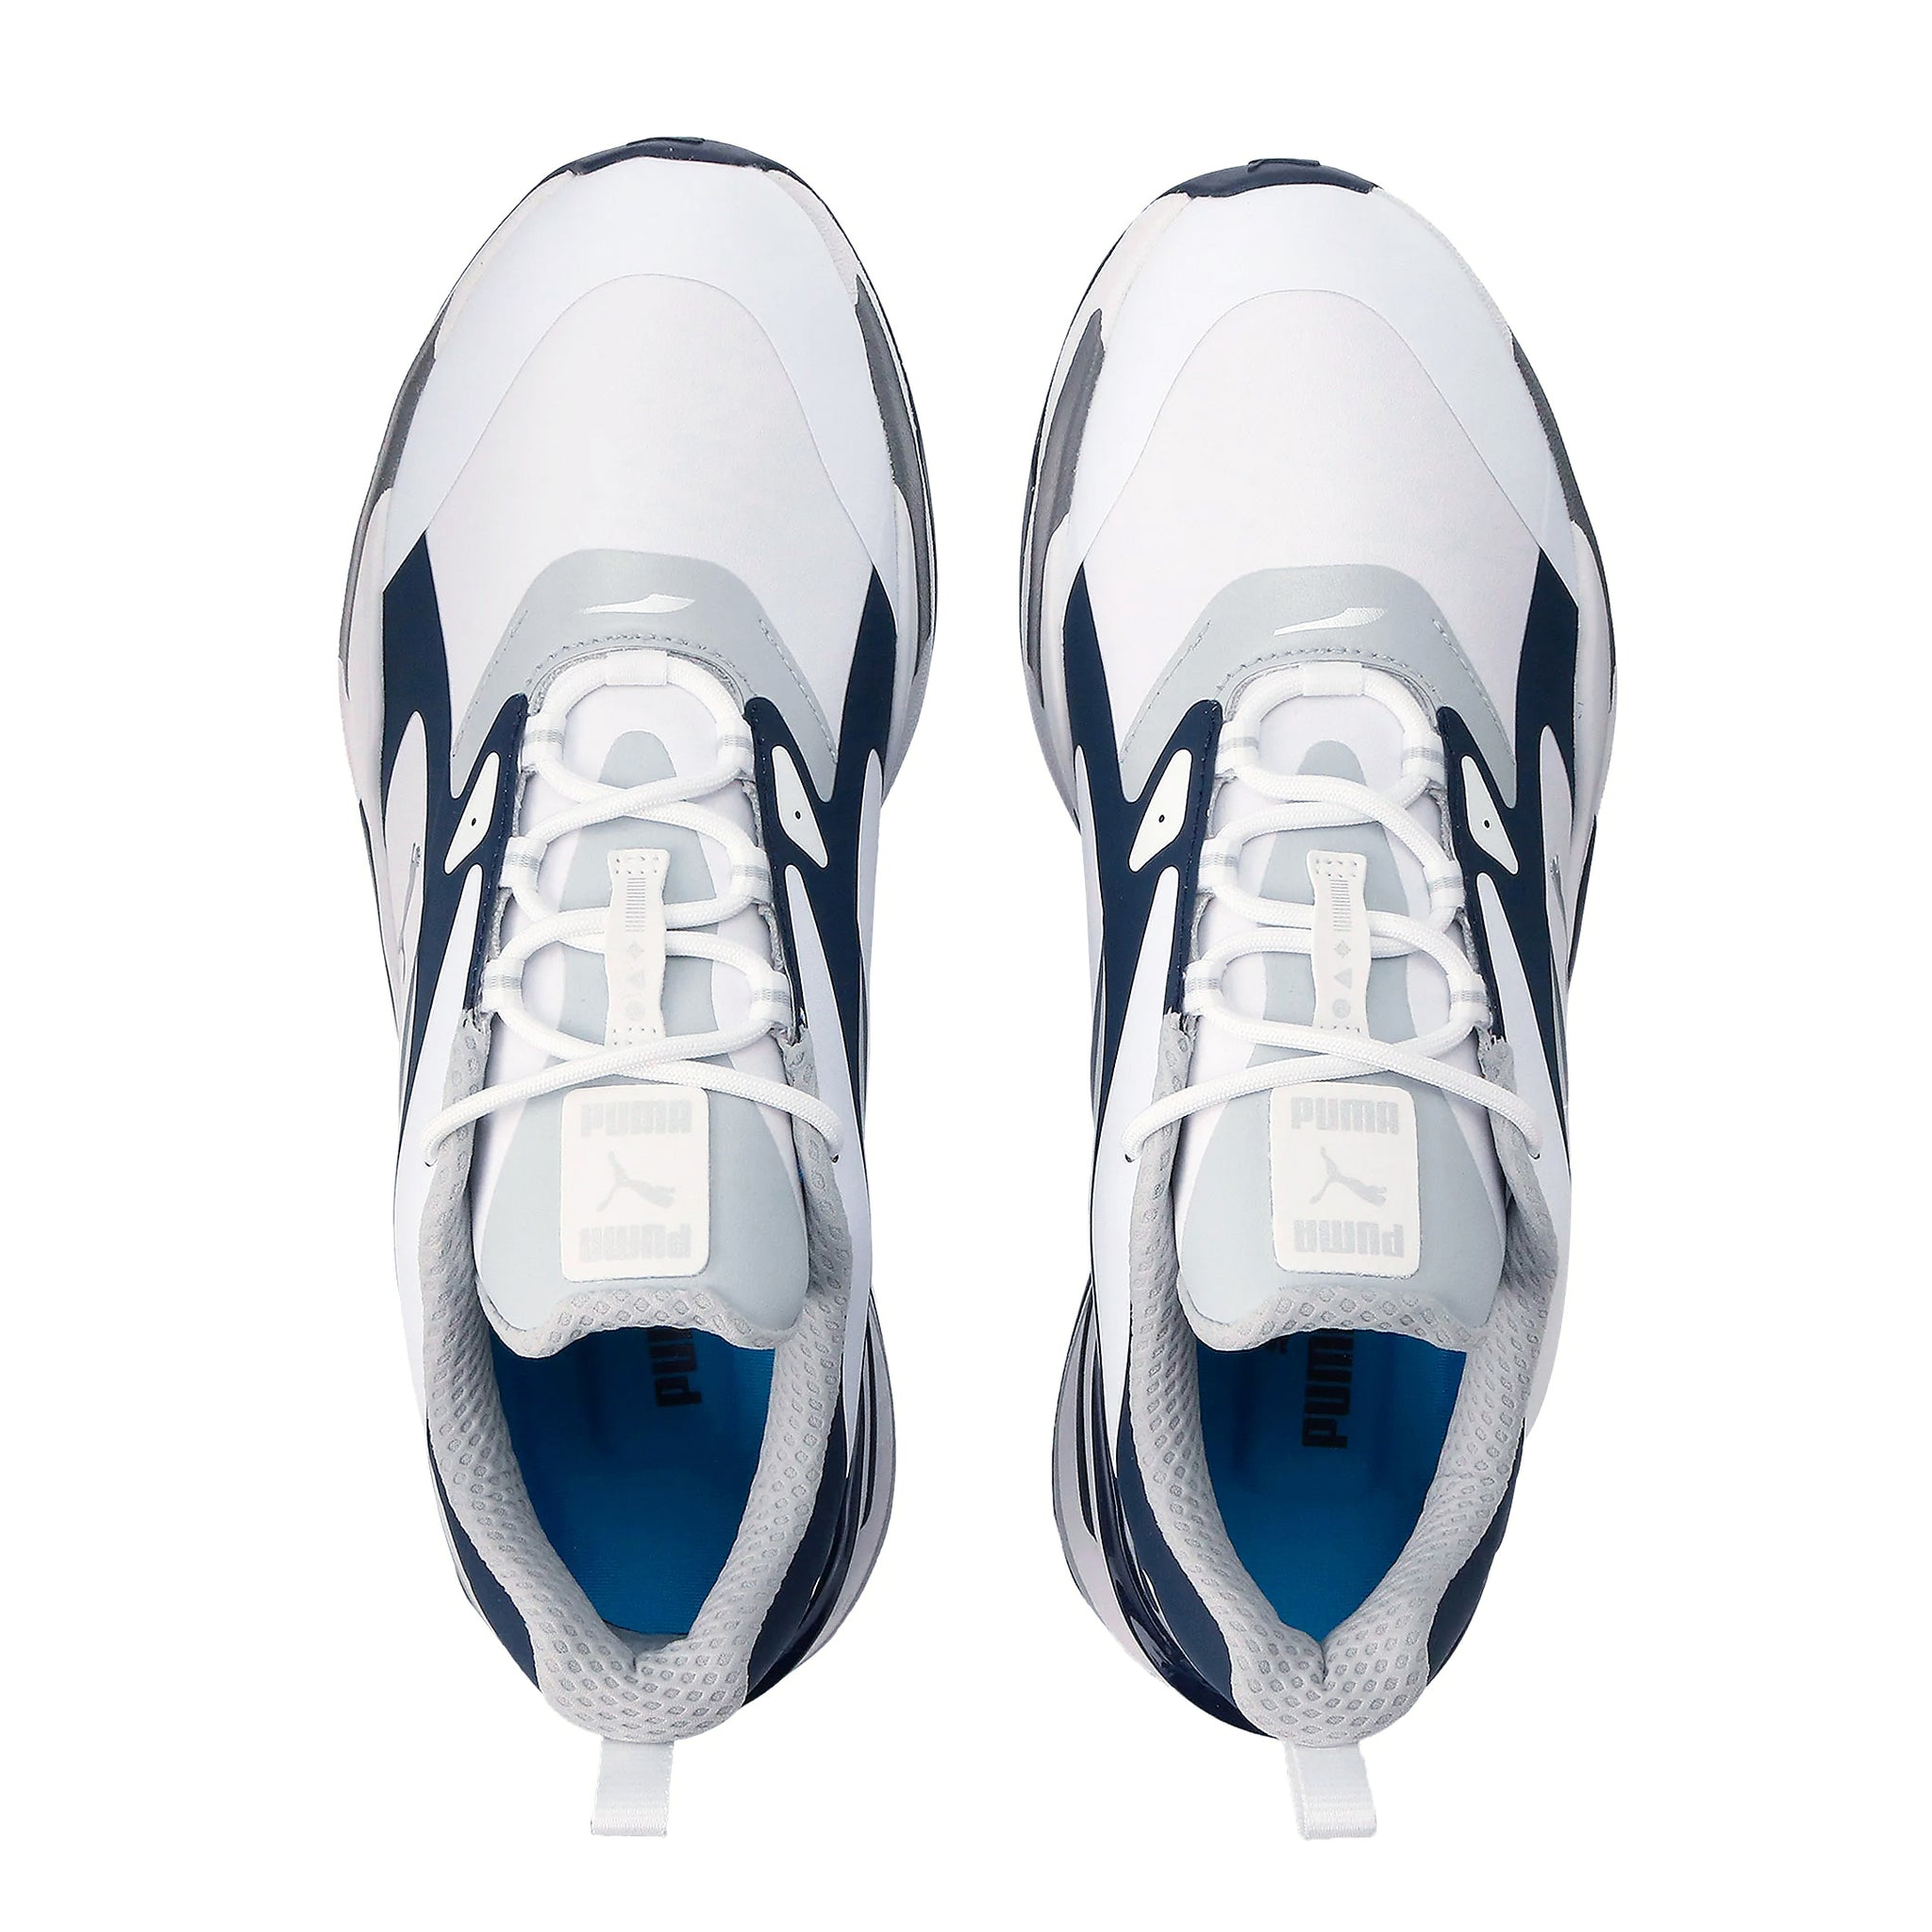 puma-gs-fast-golf-shoes-376357-puma-white-navy-blazer-high-rise-08